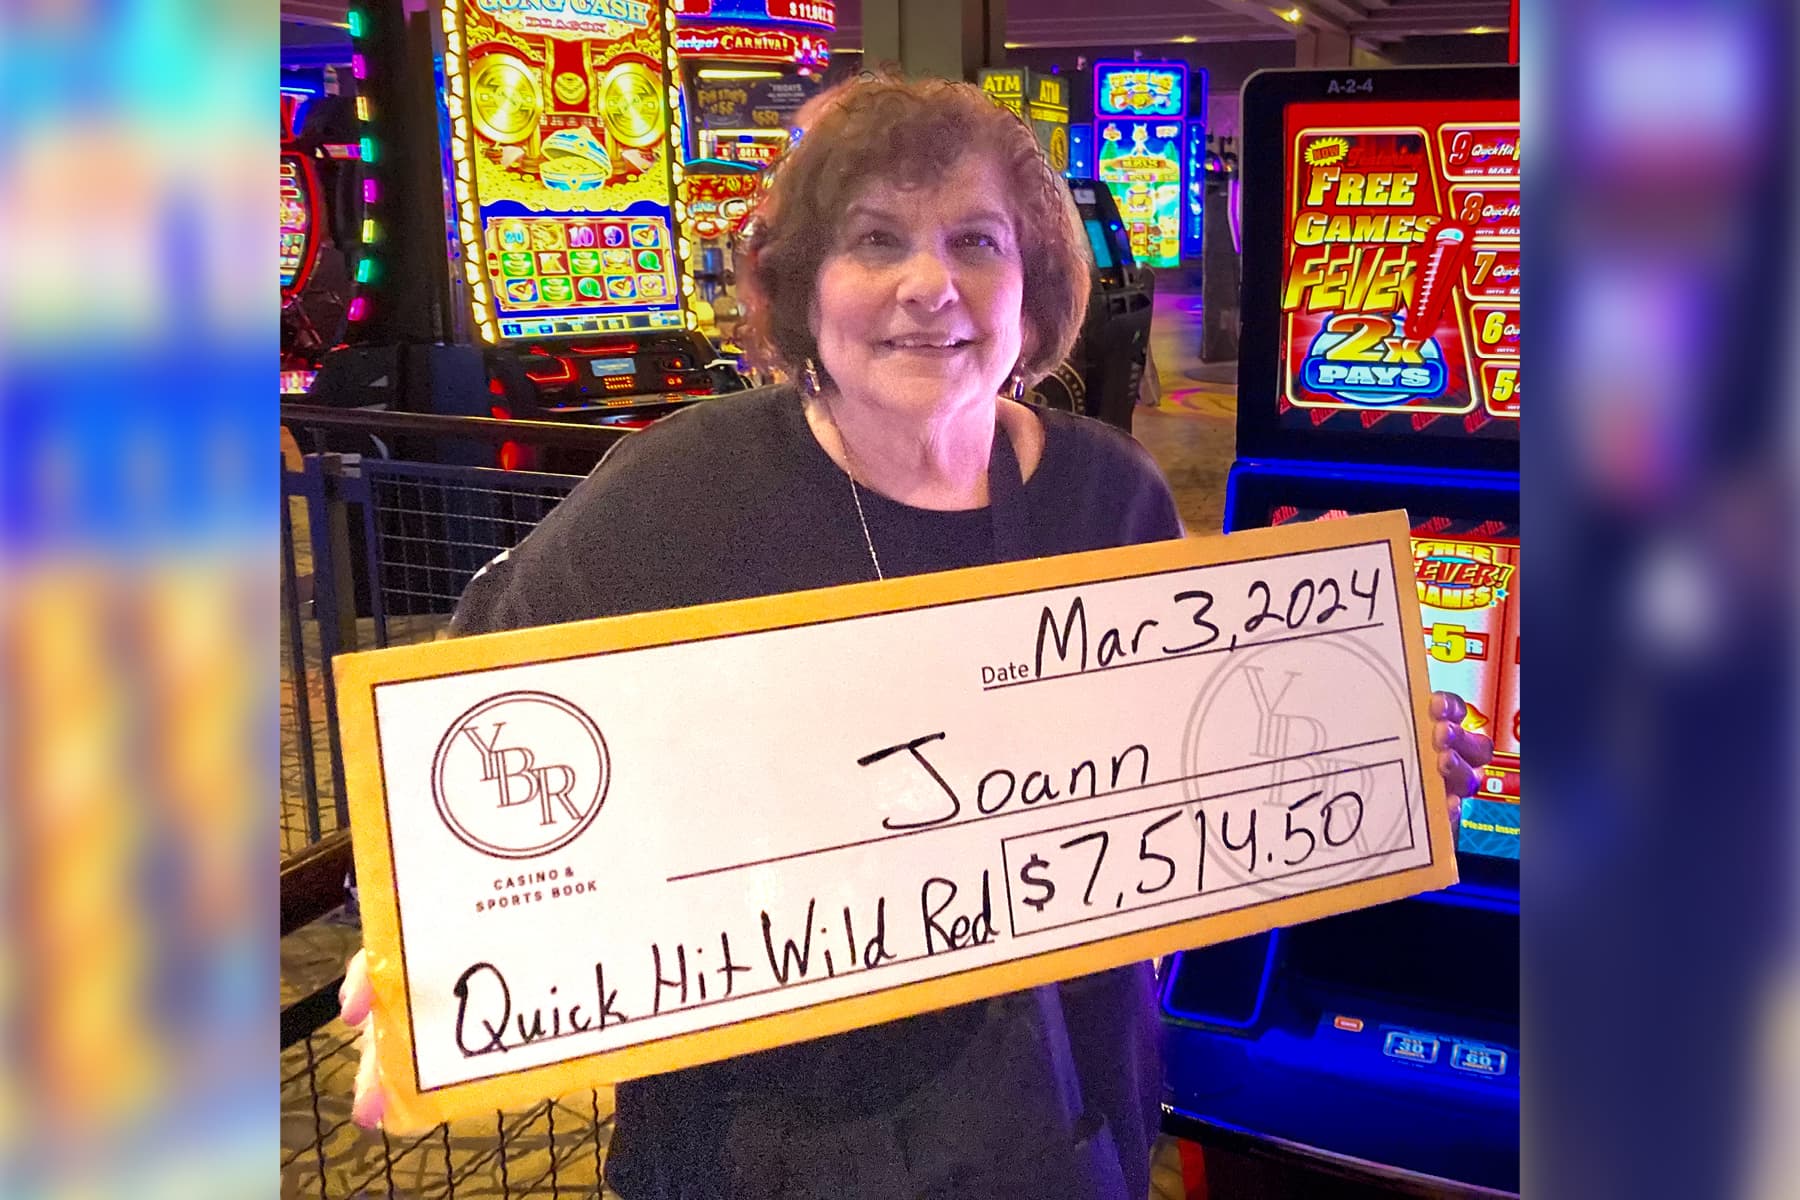 Joann won $7,514